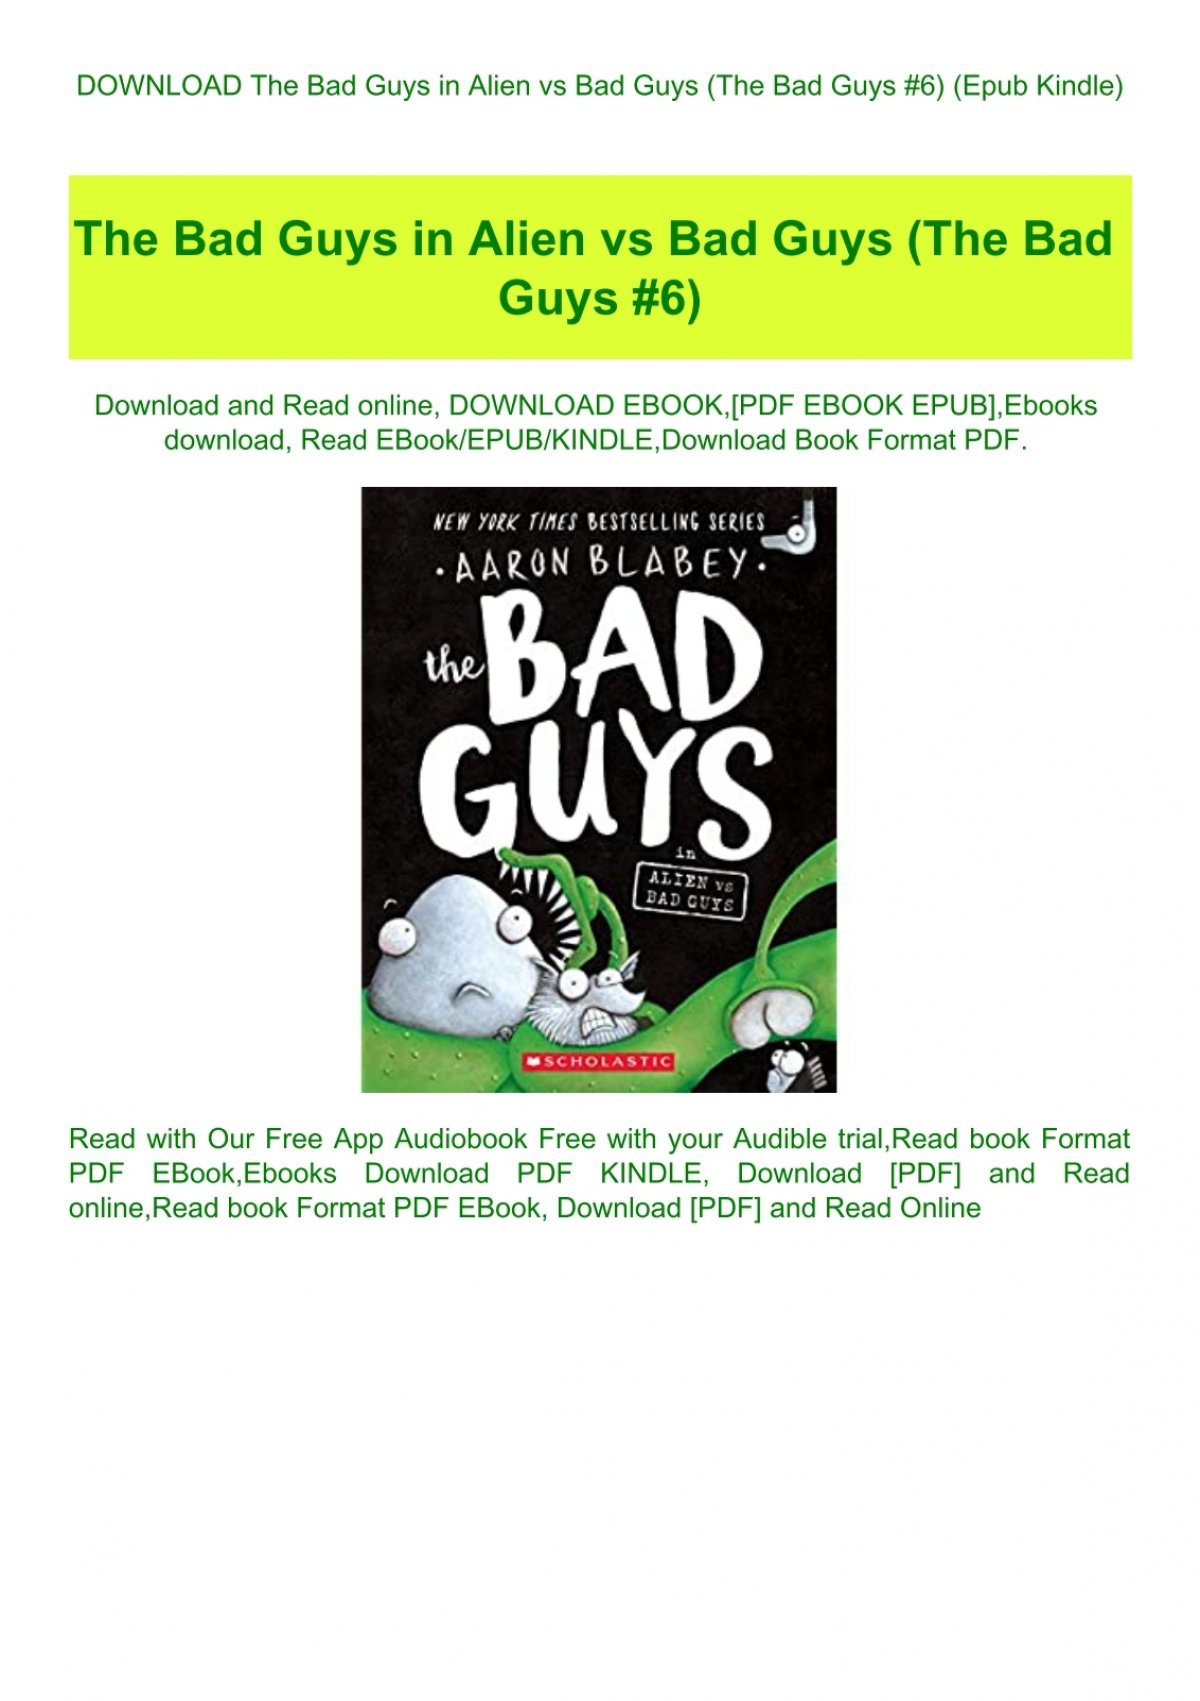 Download The Bad Guys In Alien Vs Bad Guys The Bad Guys 6 Epub